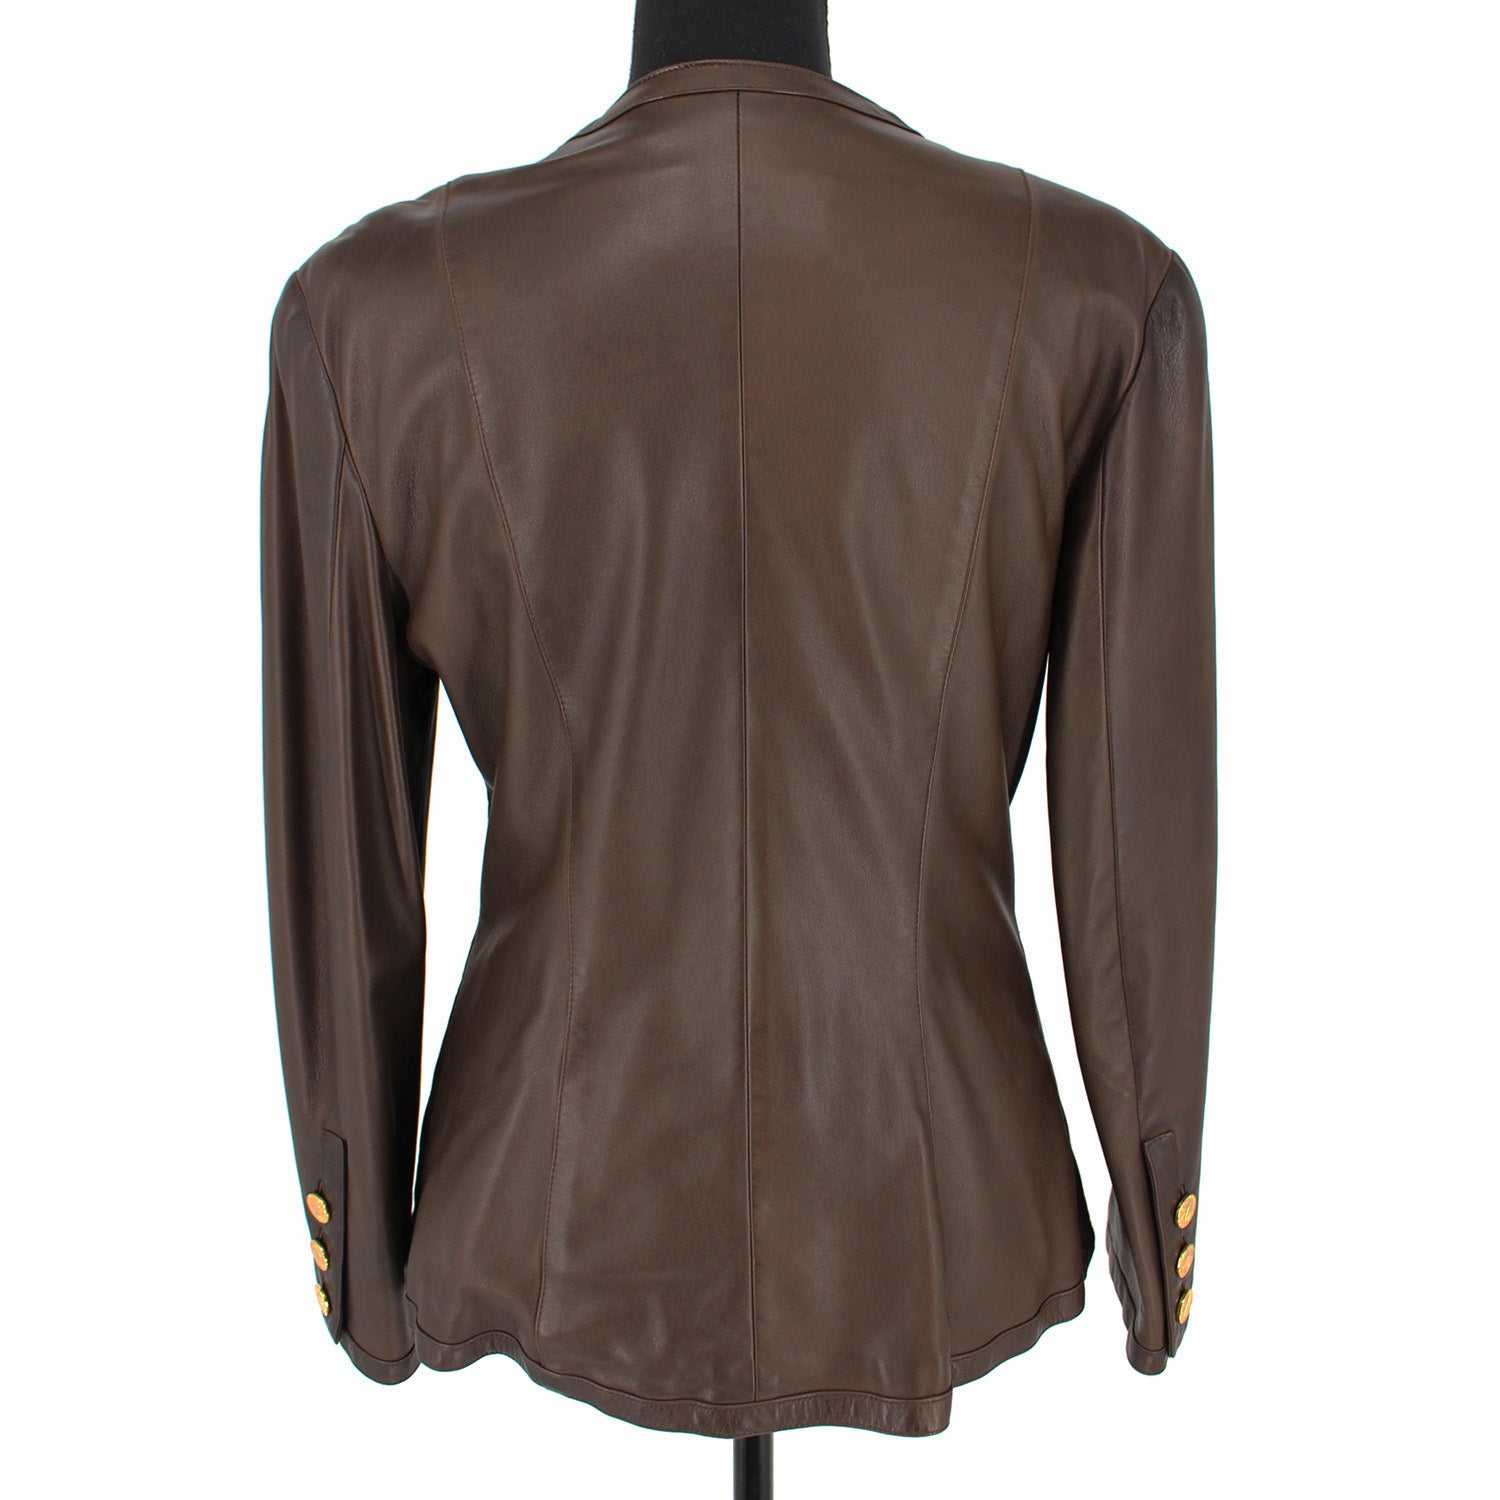 classic chanel jacket 40